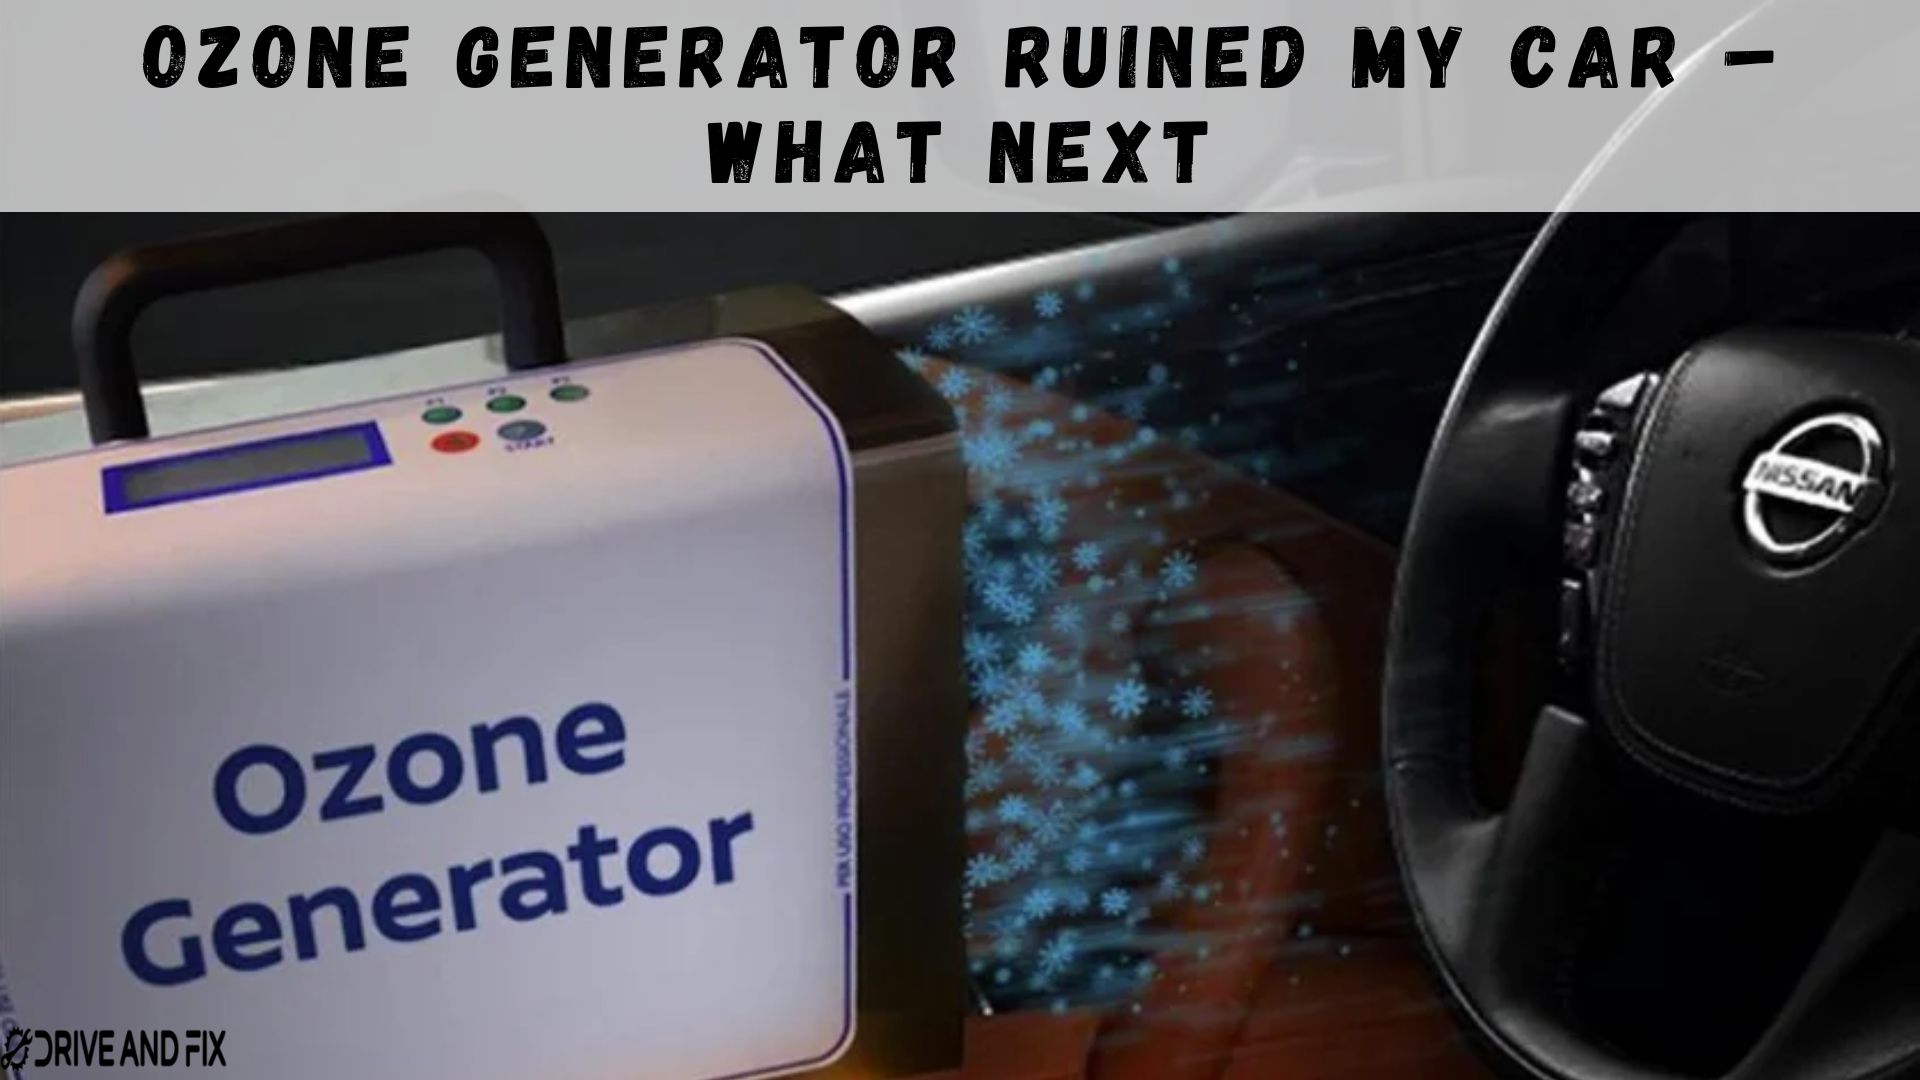 ozone generator ruined my car